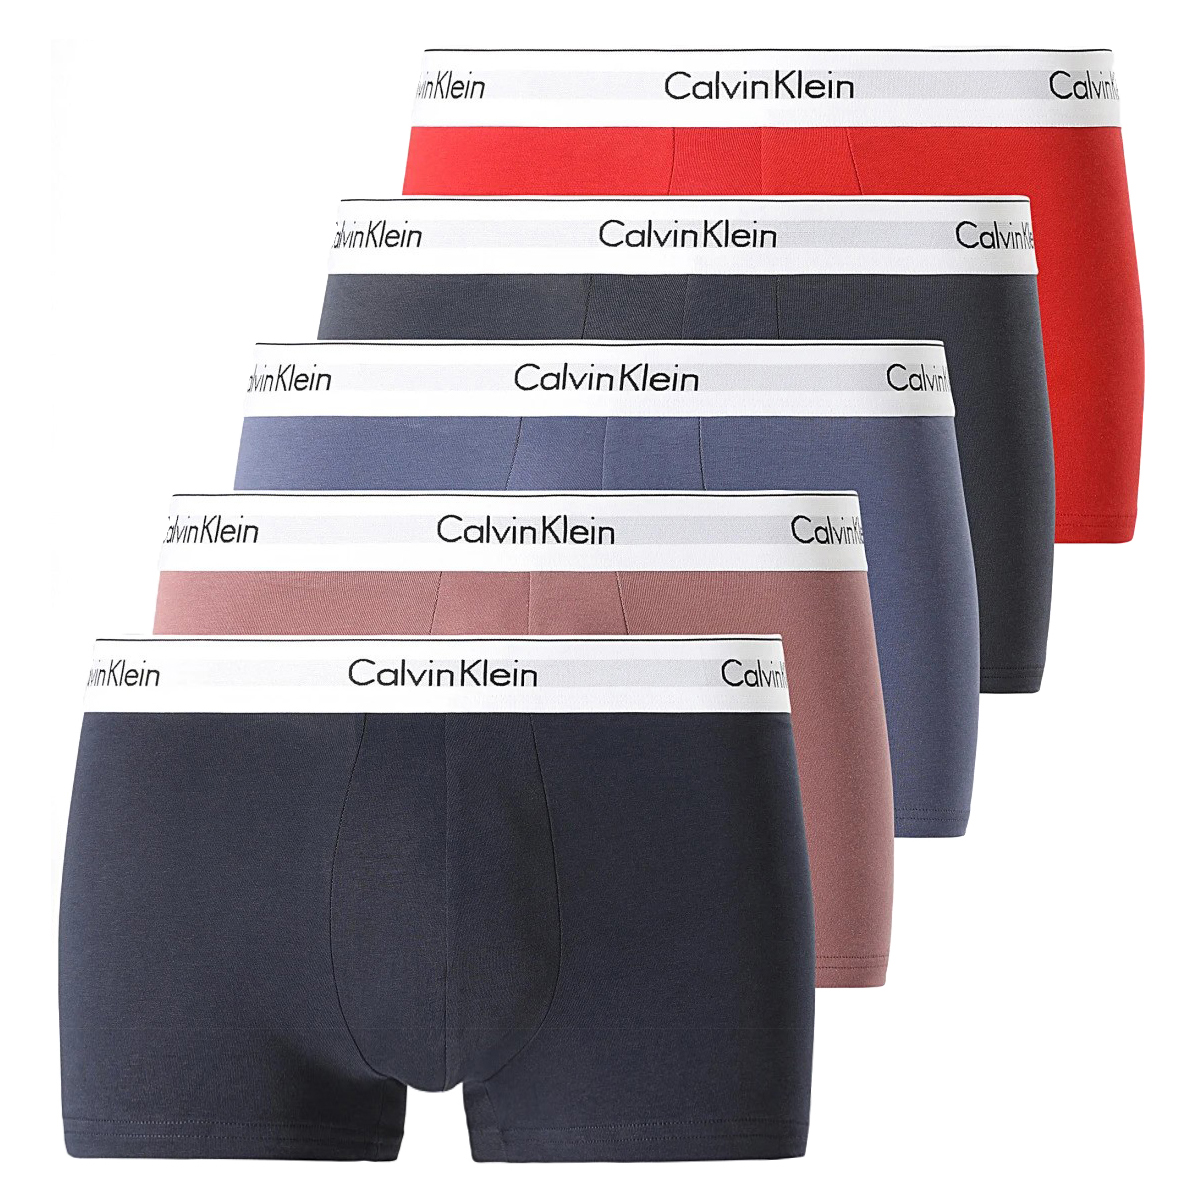 Afbeelding van Calvin Klein 5-pack boxers